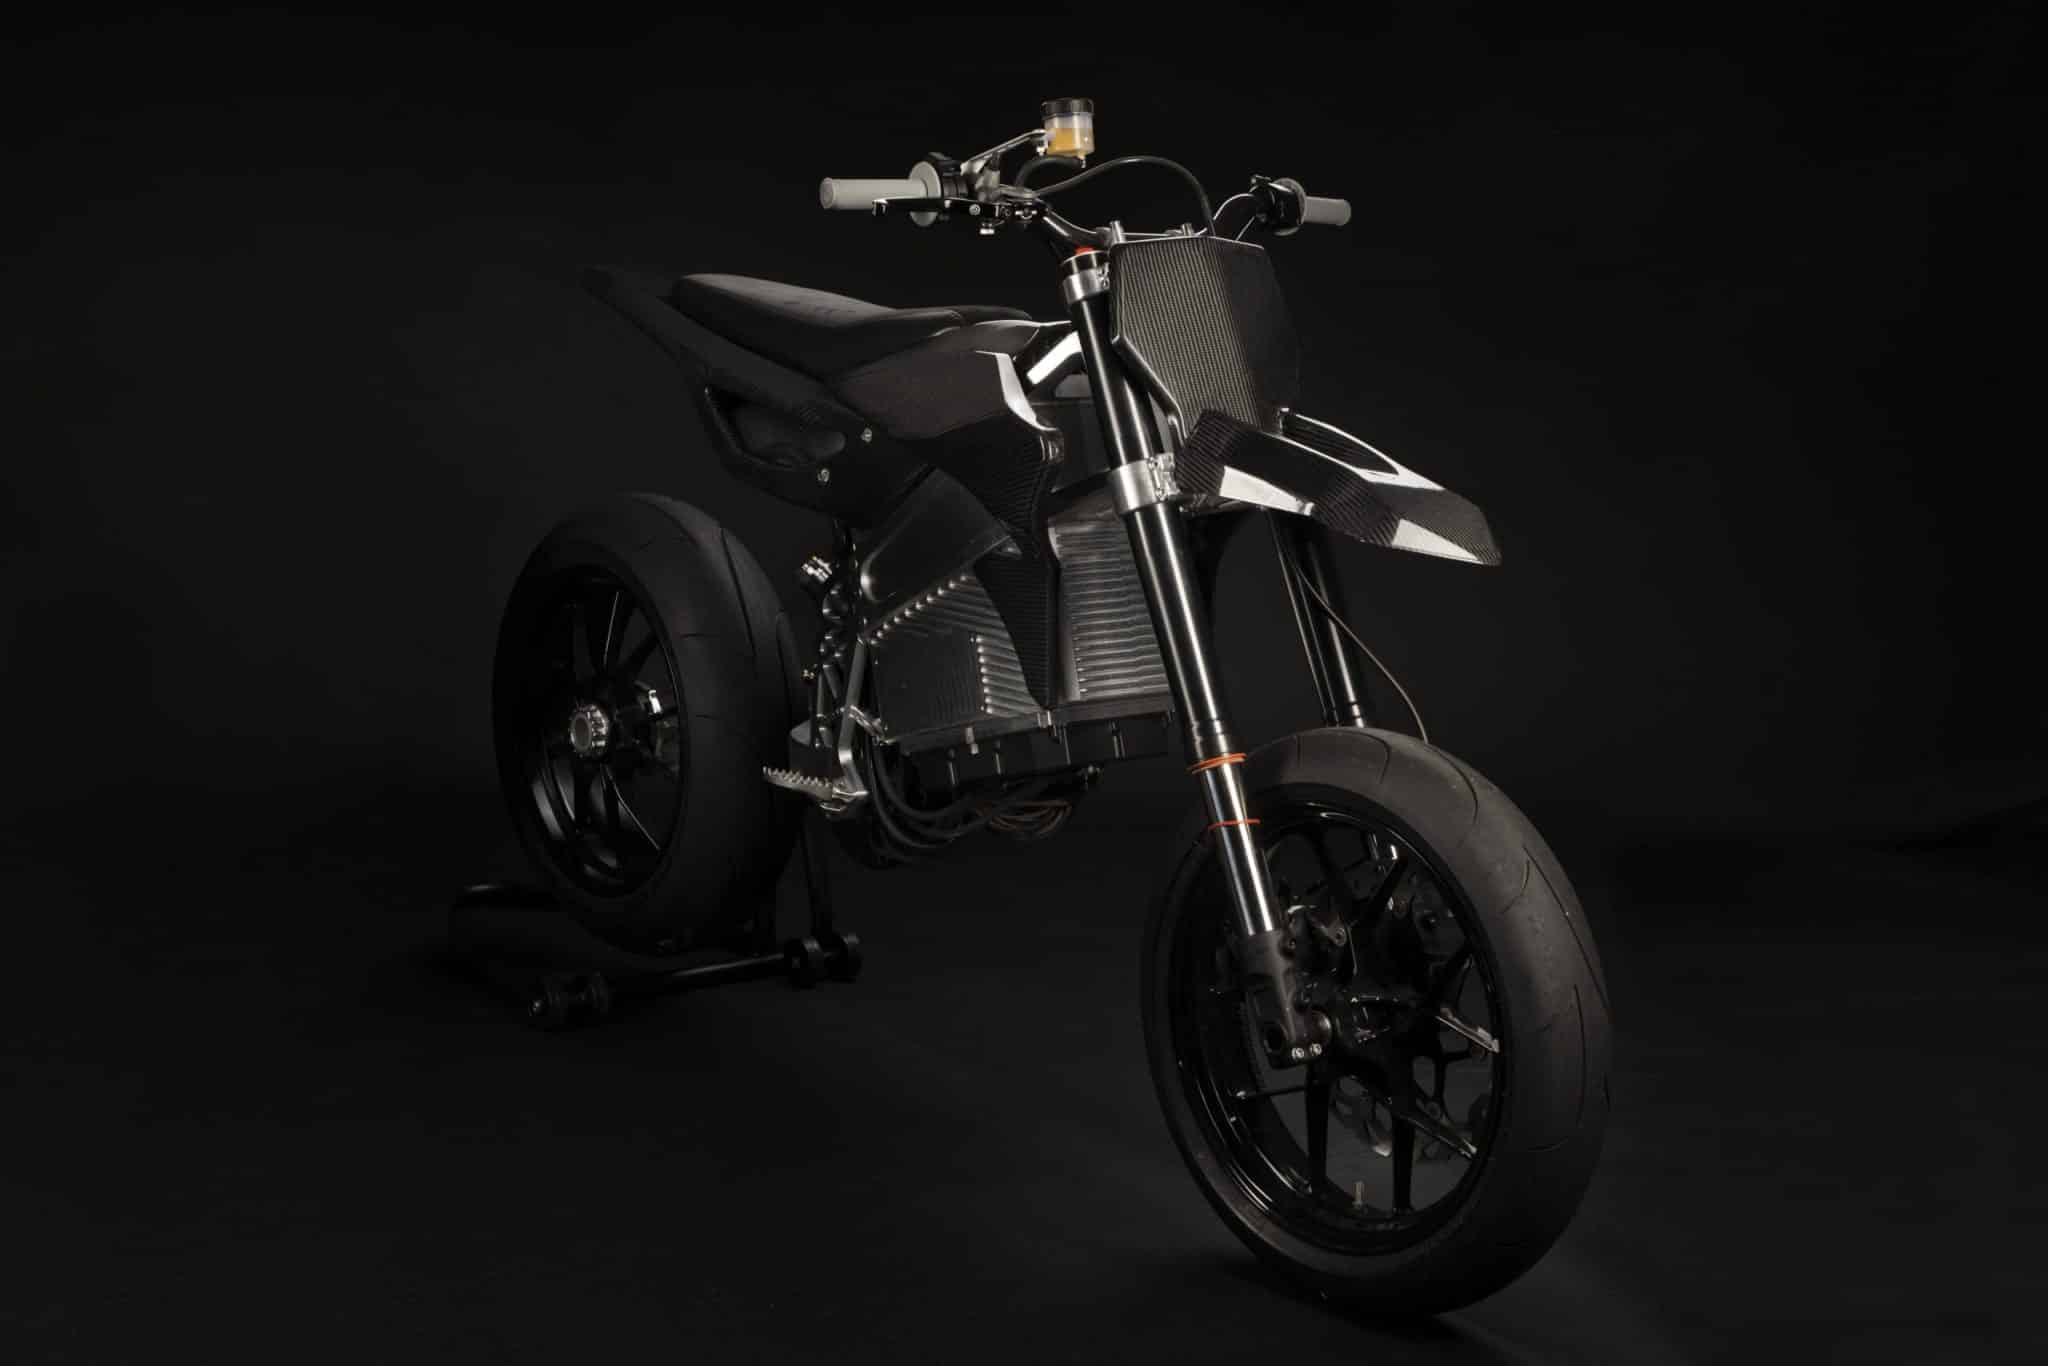 Unusual: Axiis Liion, a Supermotard with a MotoGP weight/power ratio